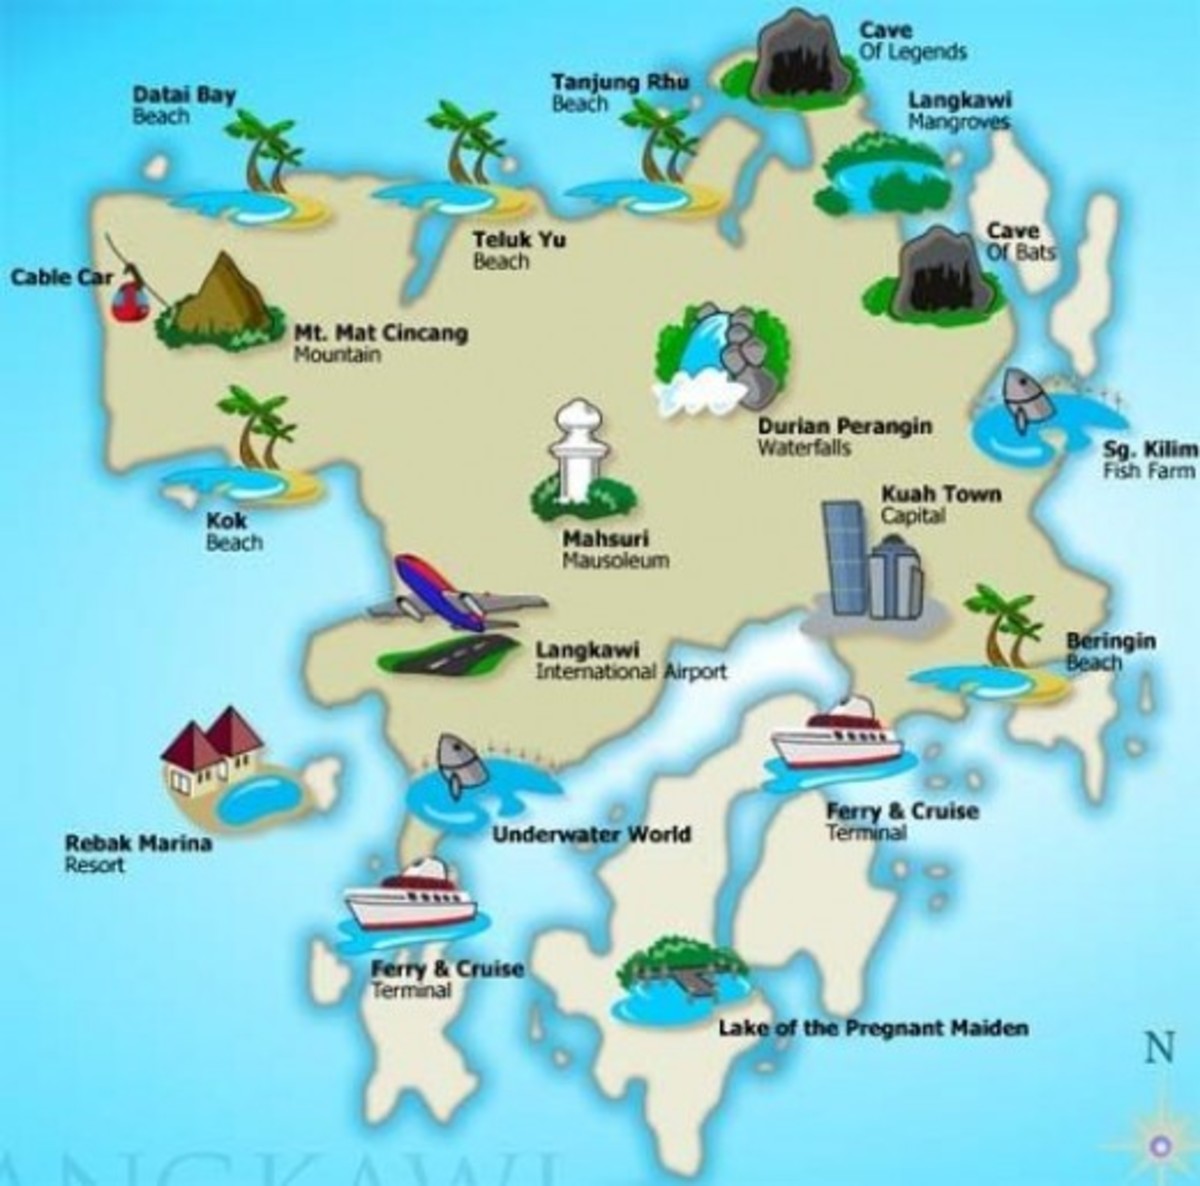 langkawi tourism blueprint